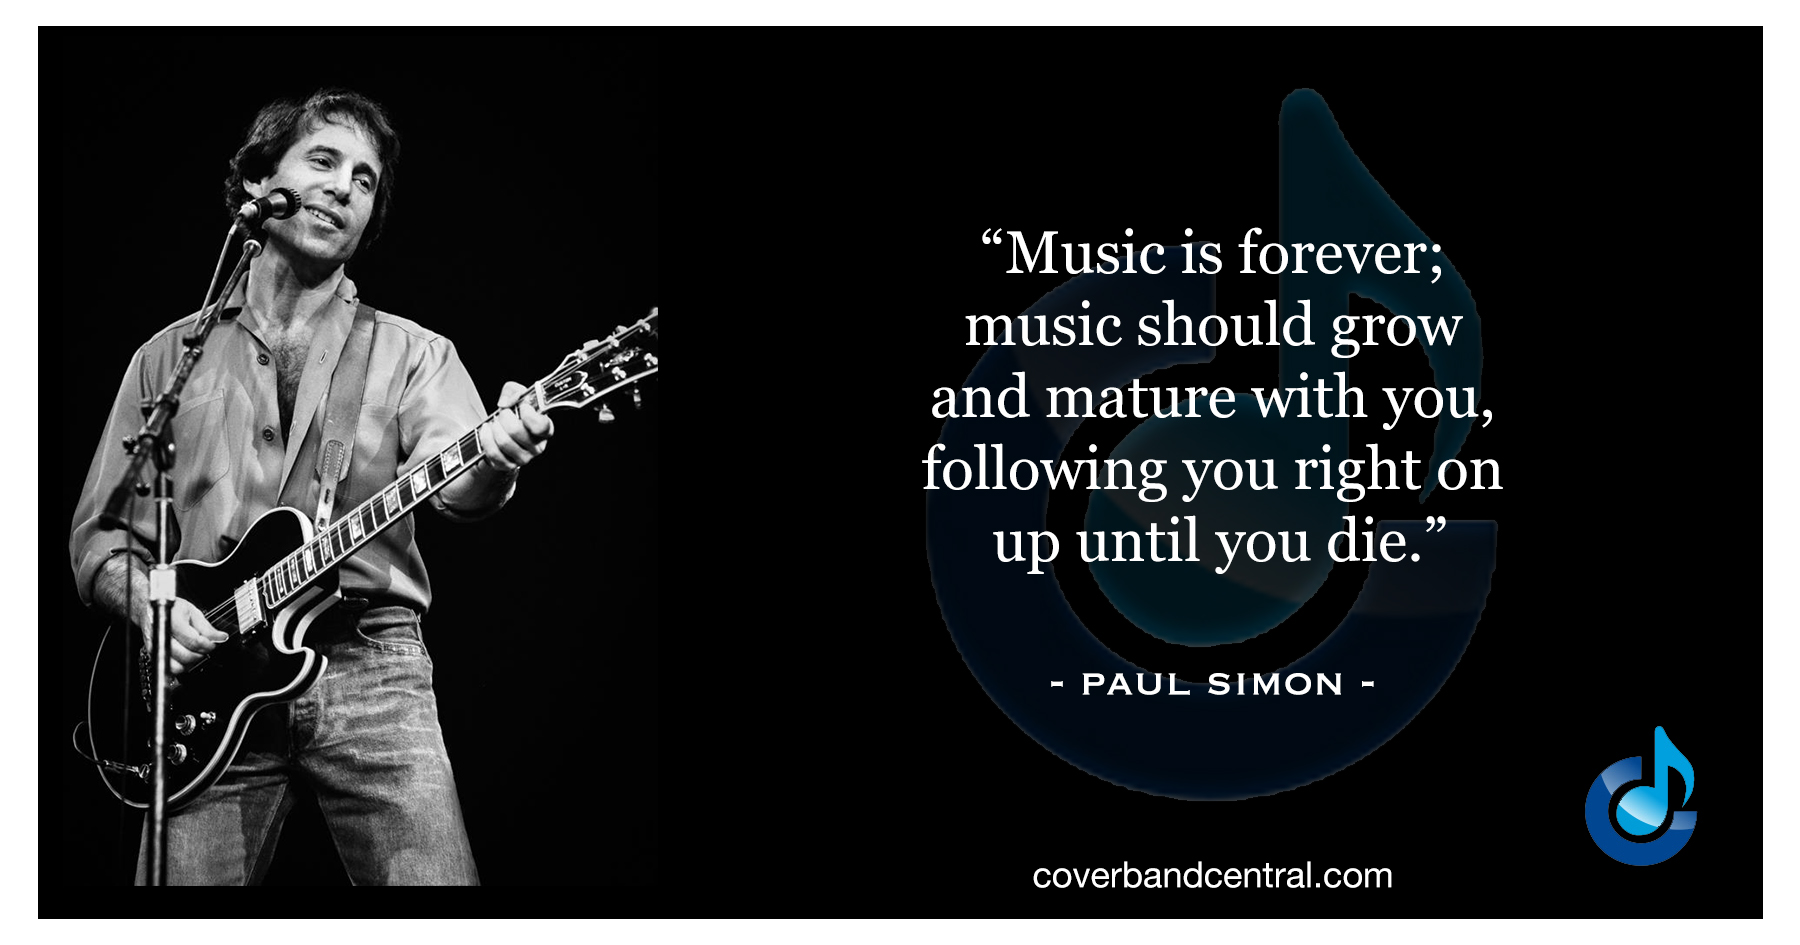 Paul Simon quote